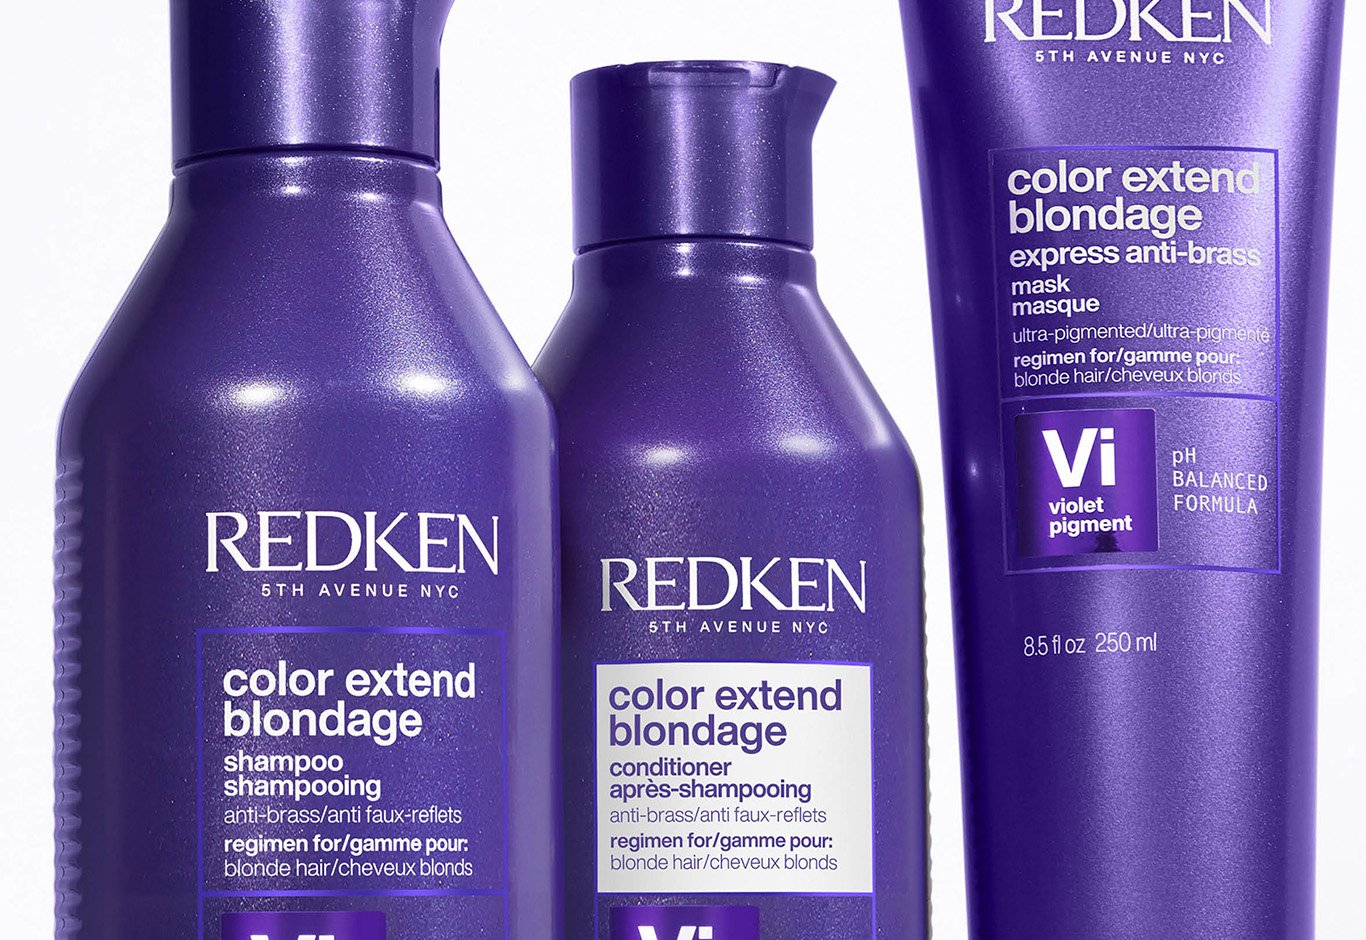 Redken Hair Products | Redken | Salon Services